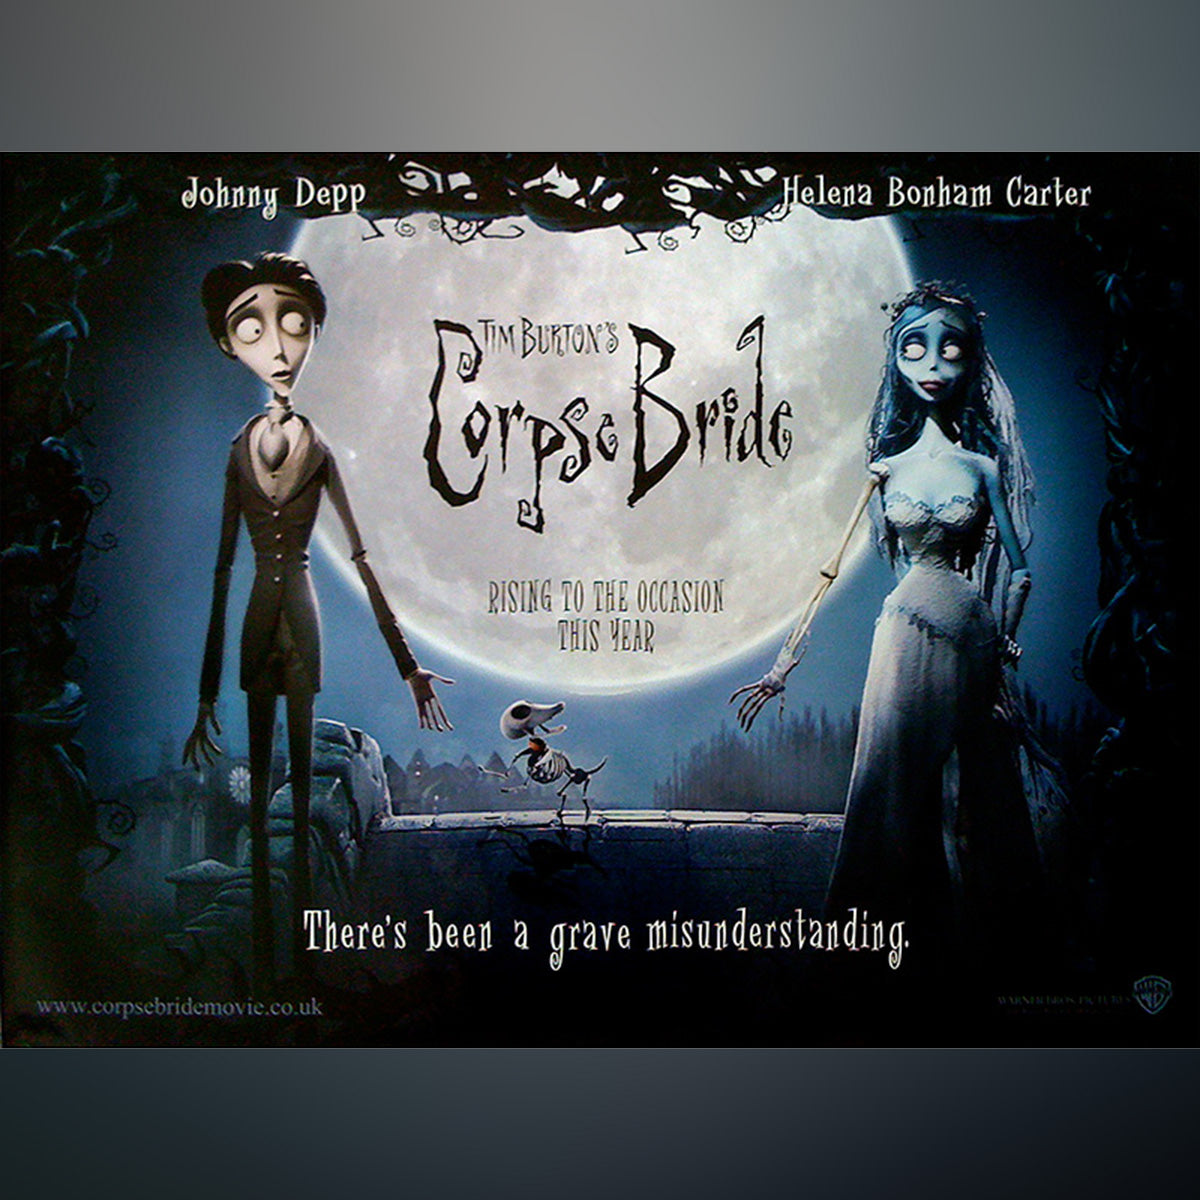 Original Movie Poster of Corpse Bride (2005)